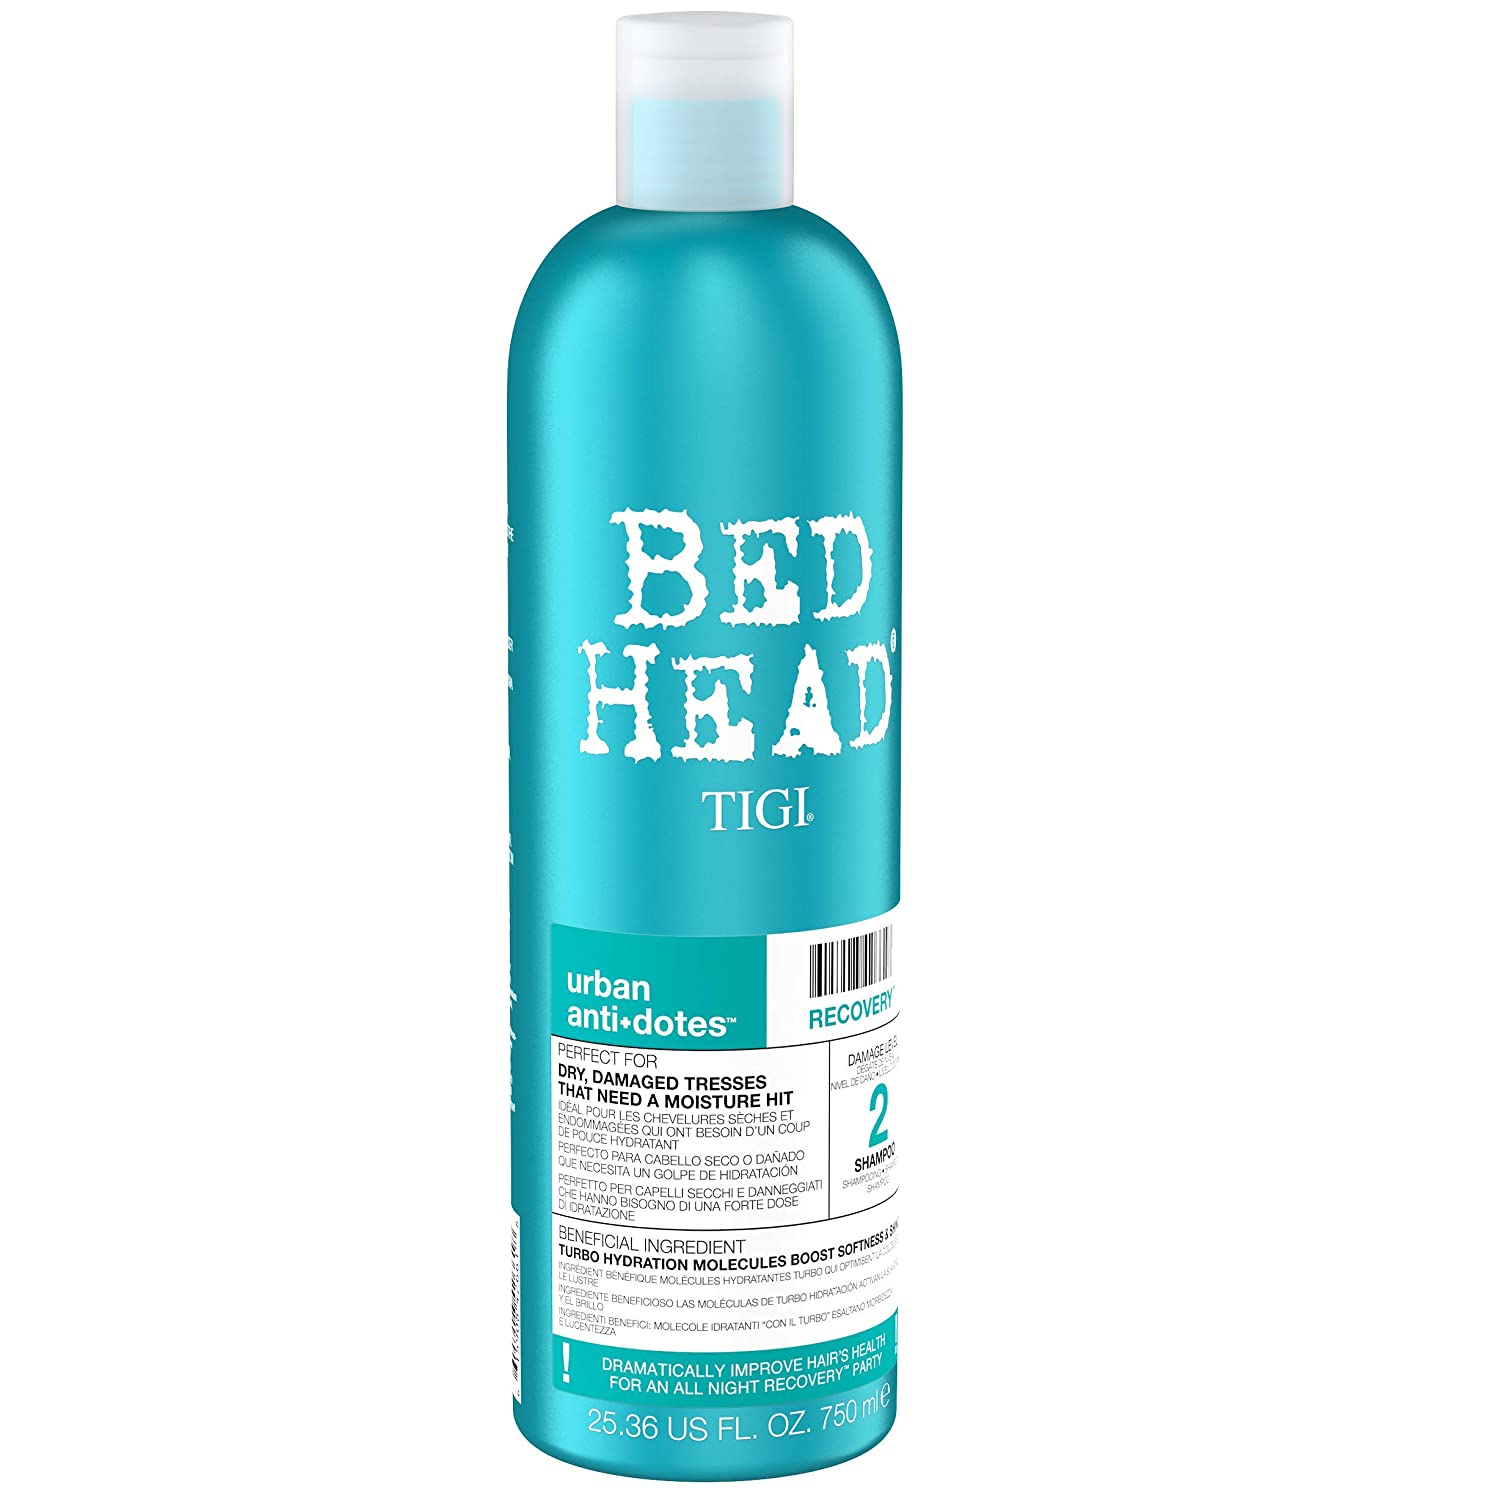 25.36-Oz Tigi Bed Head Urban Anti+dotes Recovery Shampoo (Level 2) $7.50 + Free Shipping w/ Prime or $25+